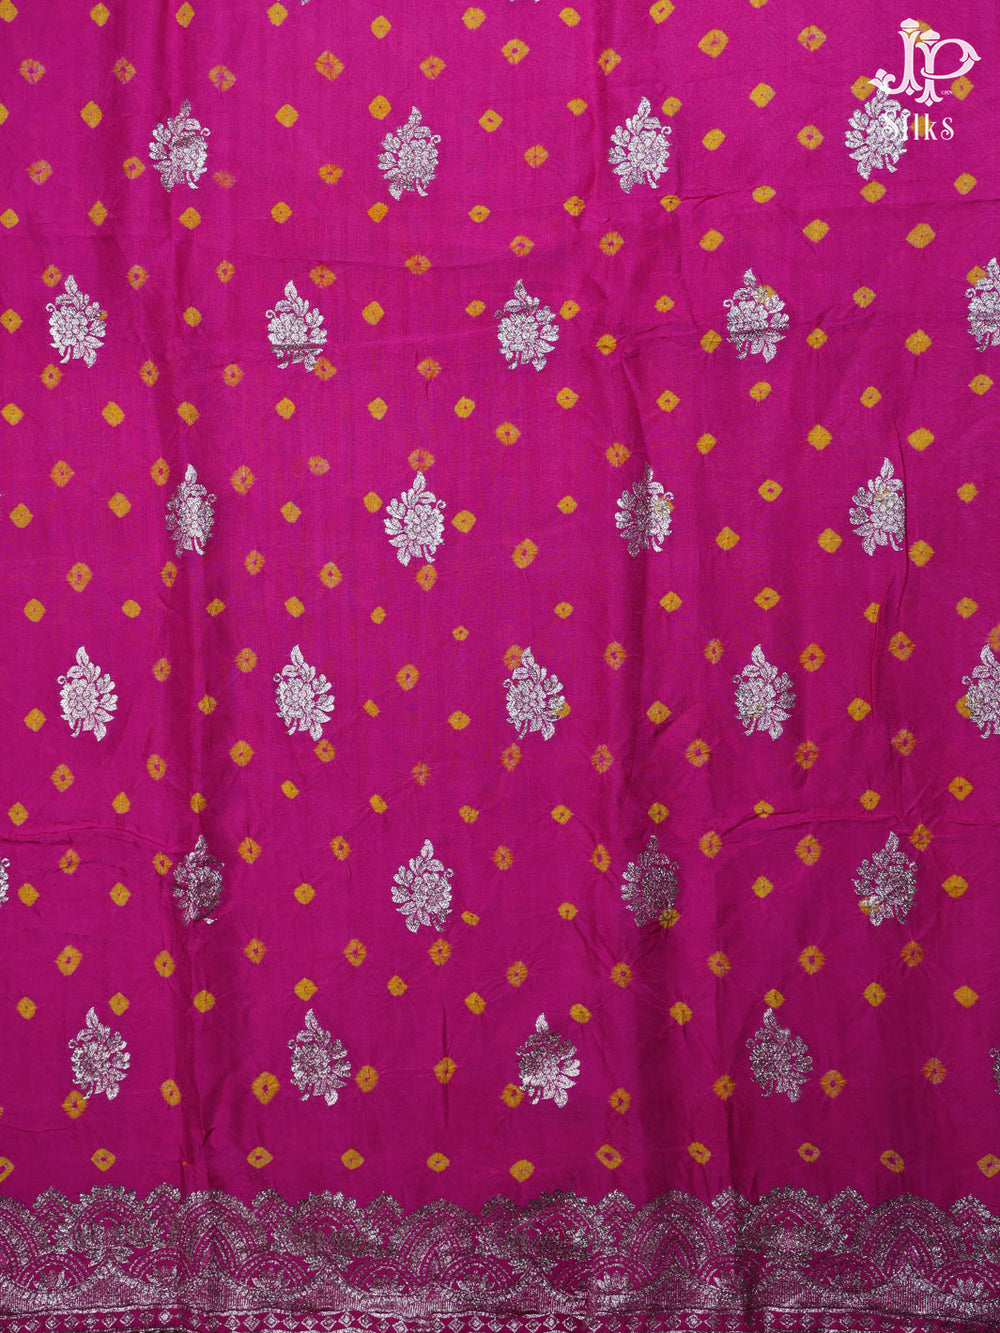 Rani Pink Banaras Chudidhar Material - E1940 - View 1